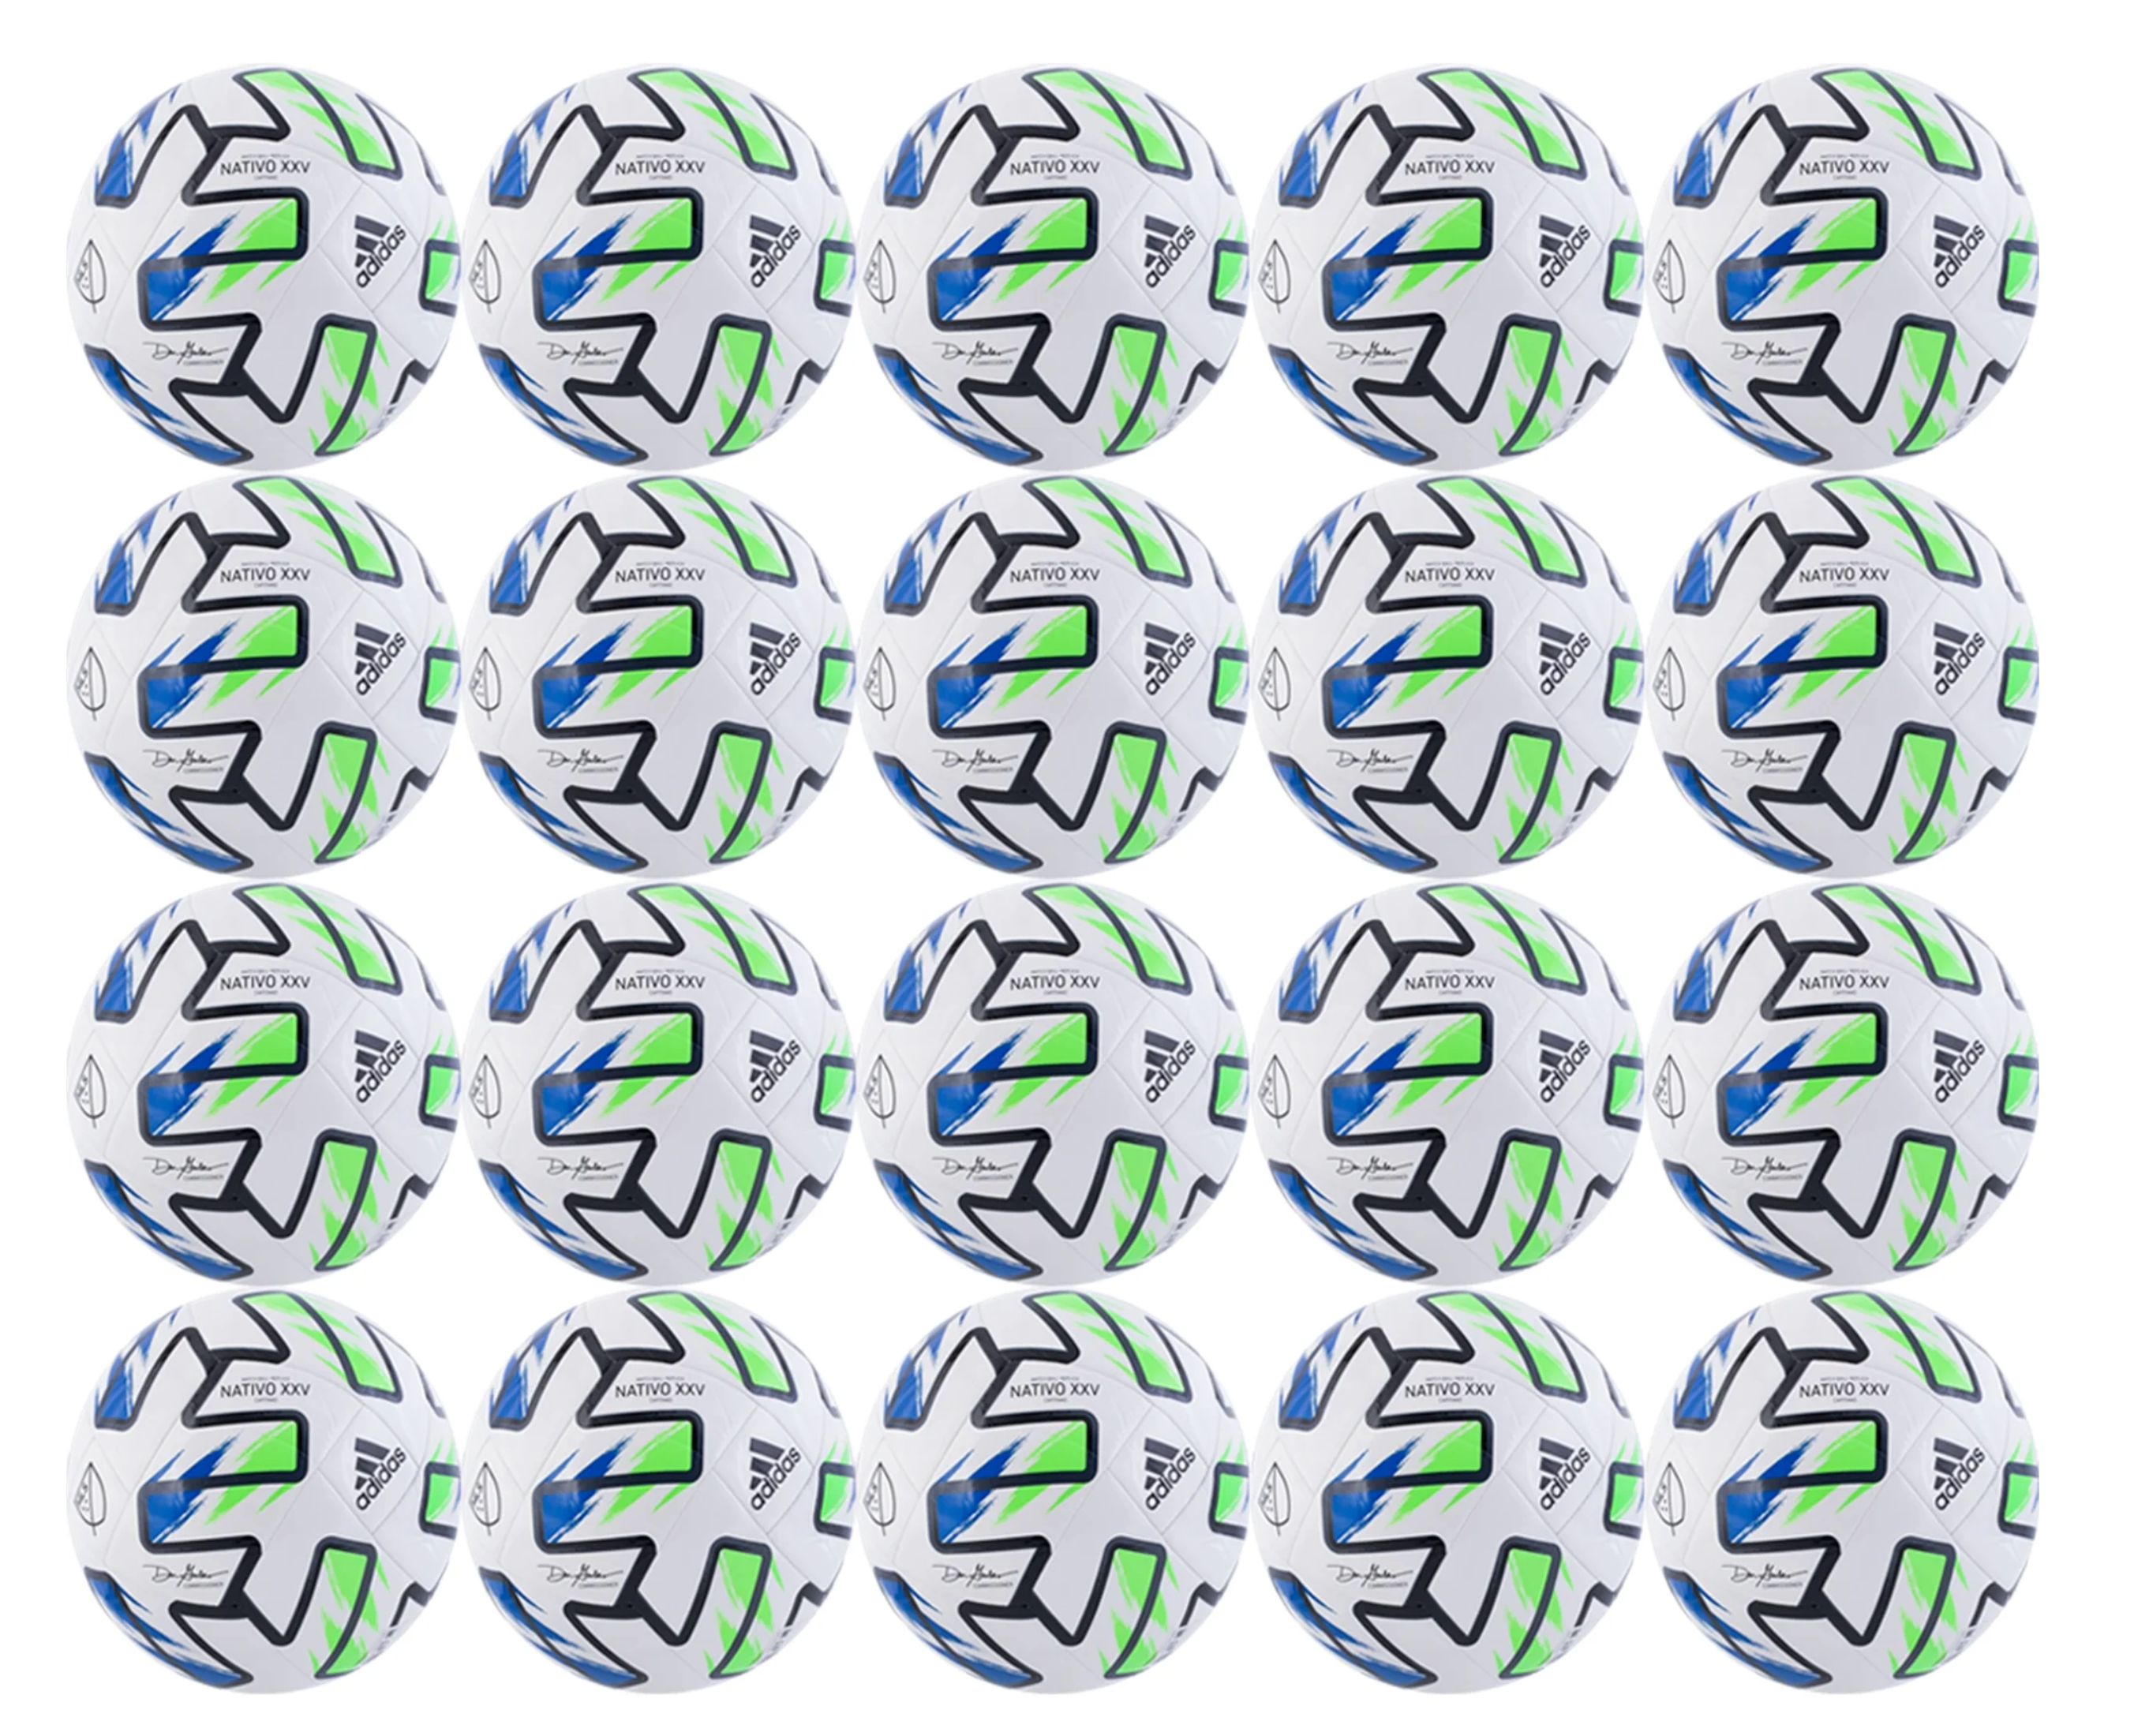 adidas soccer ball packs